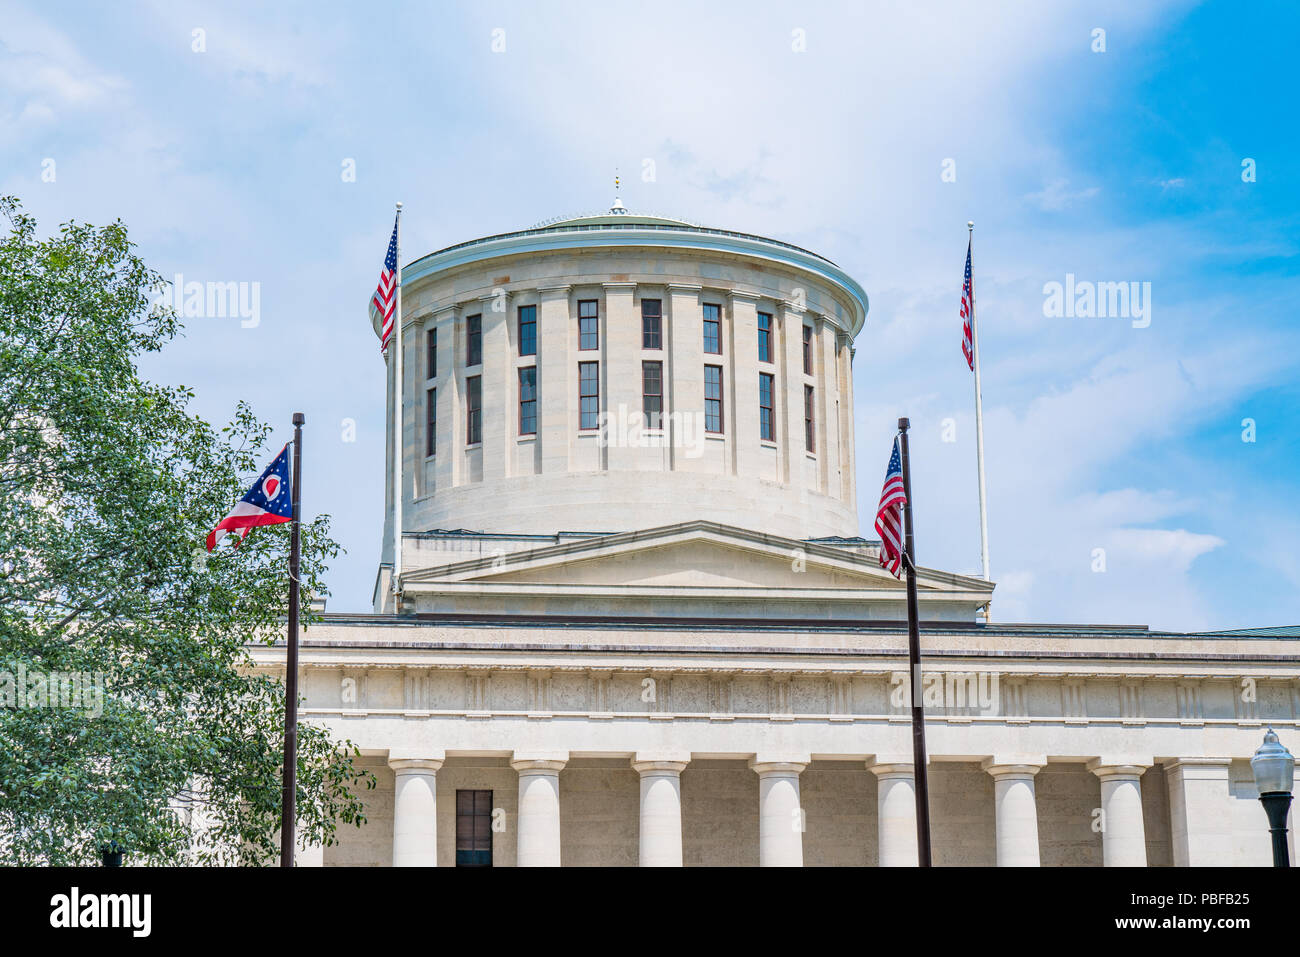 Dome of the Ohio Capital Building in Columbus, Ohio Stock Photo